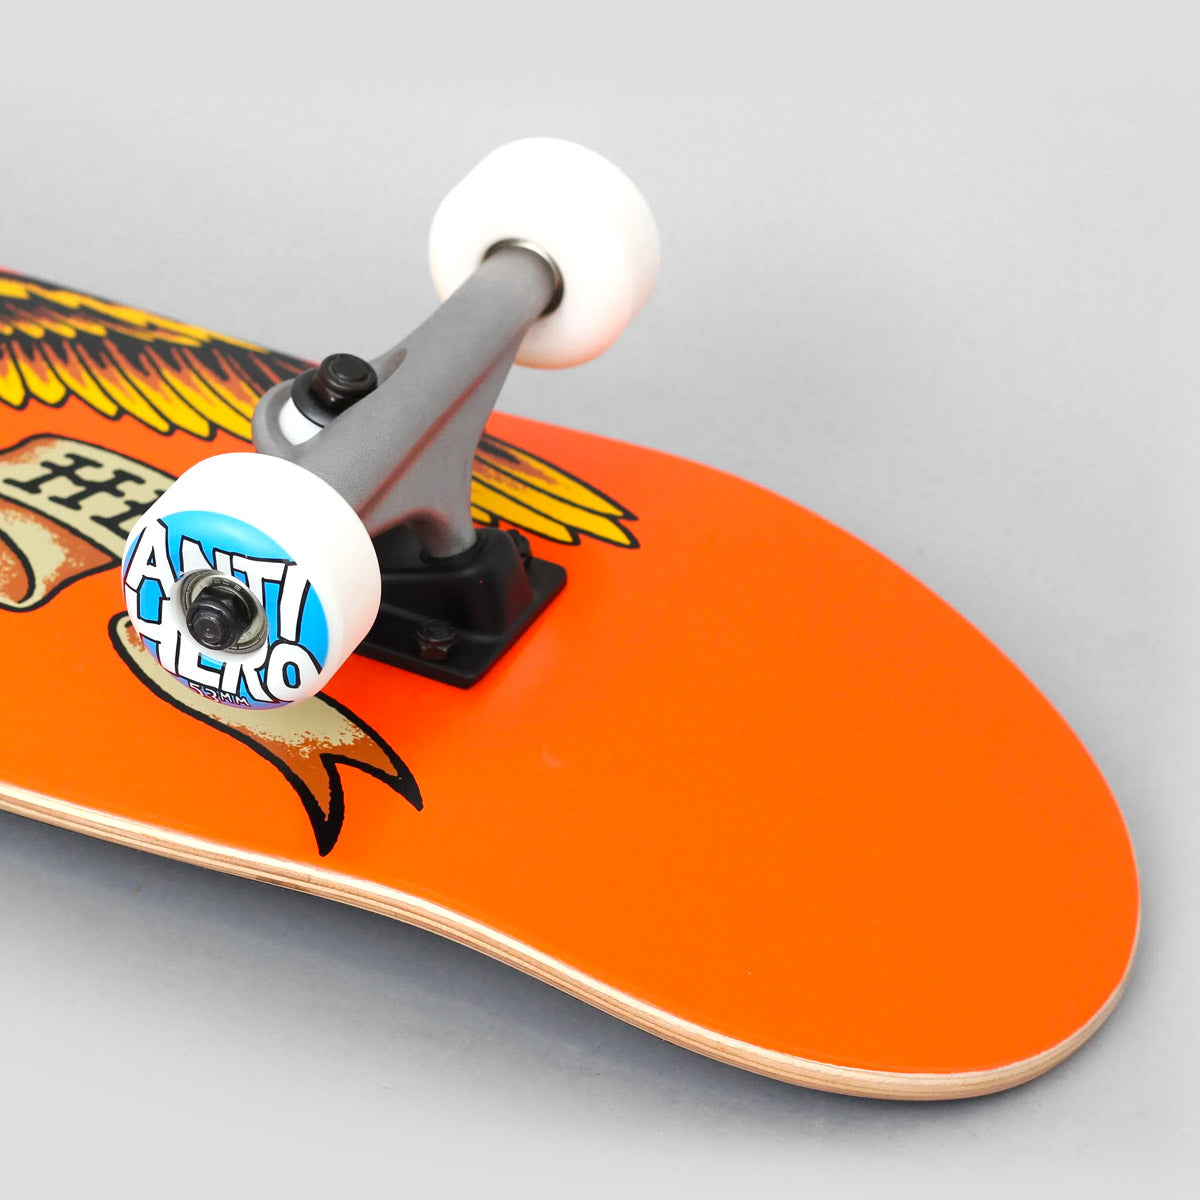 Antihero Classic Eagle Skateboard Orange - 7.75"